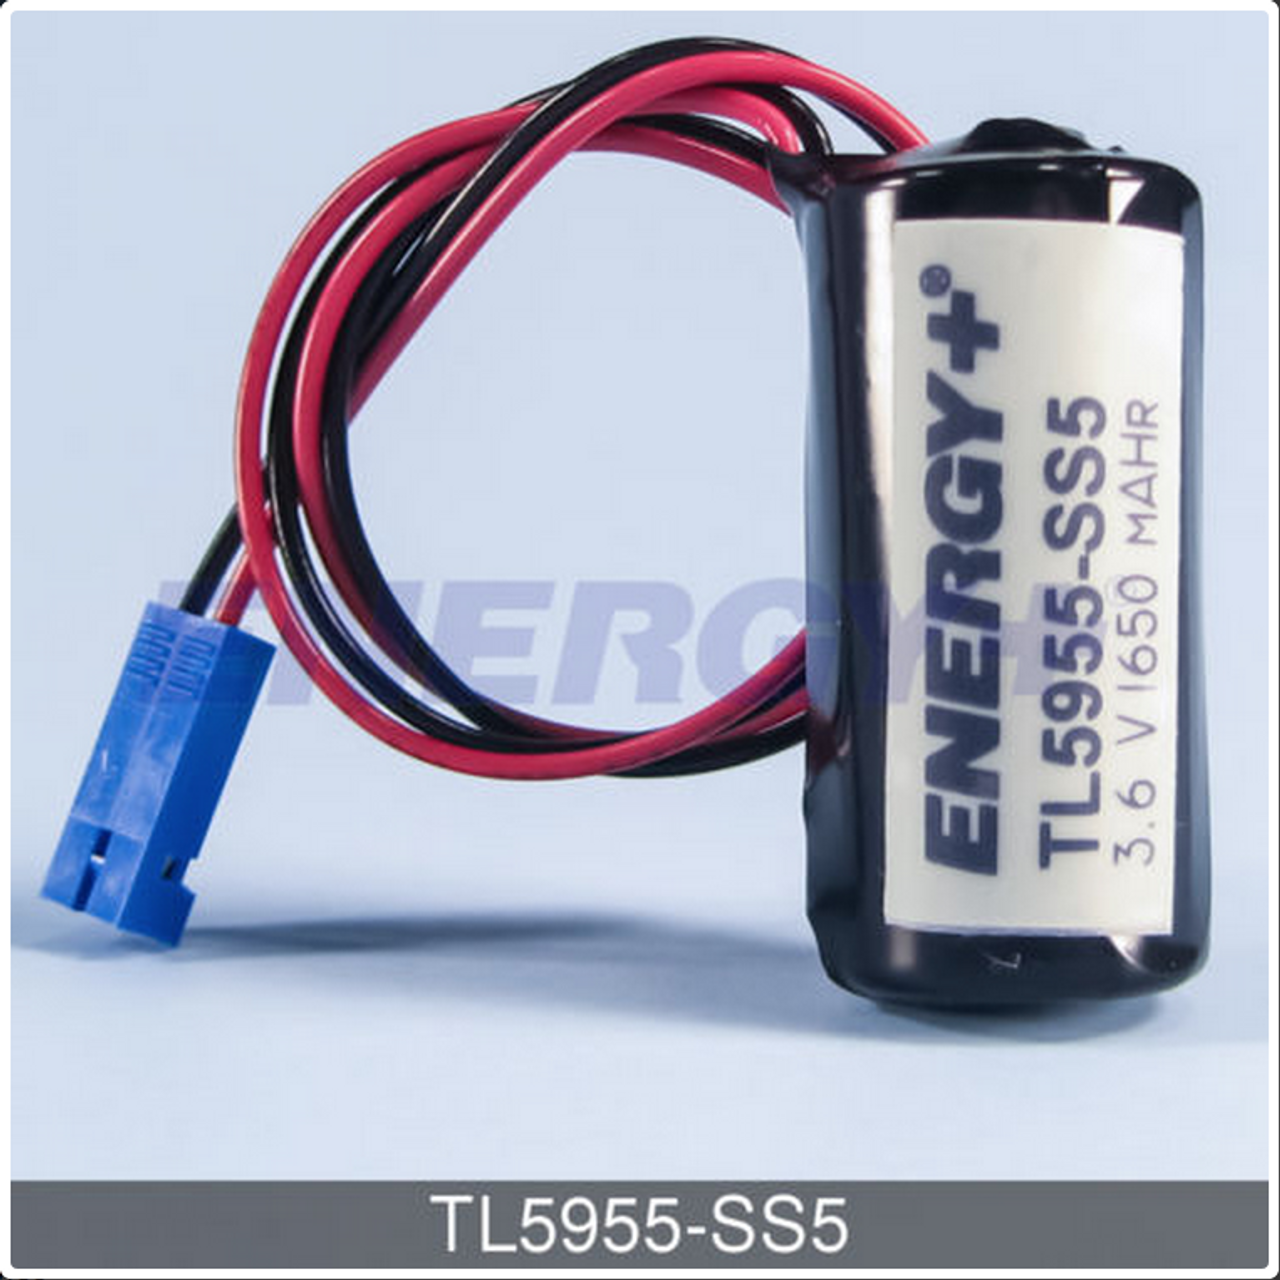 Siemens TP270 Touch Panel Battery - Simatic HMI - 3.6V Lithium PLC